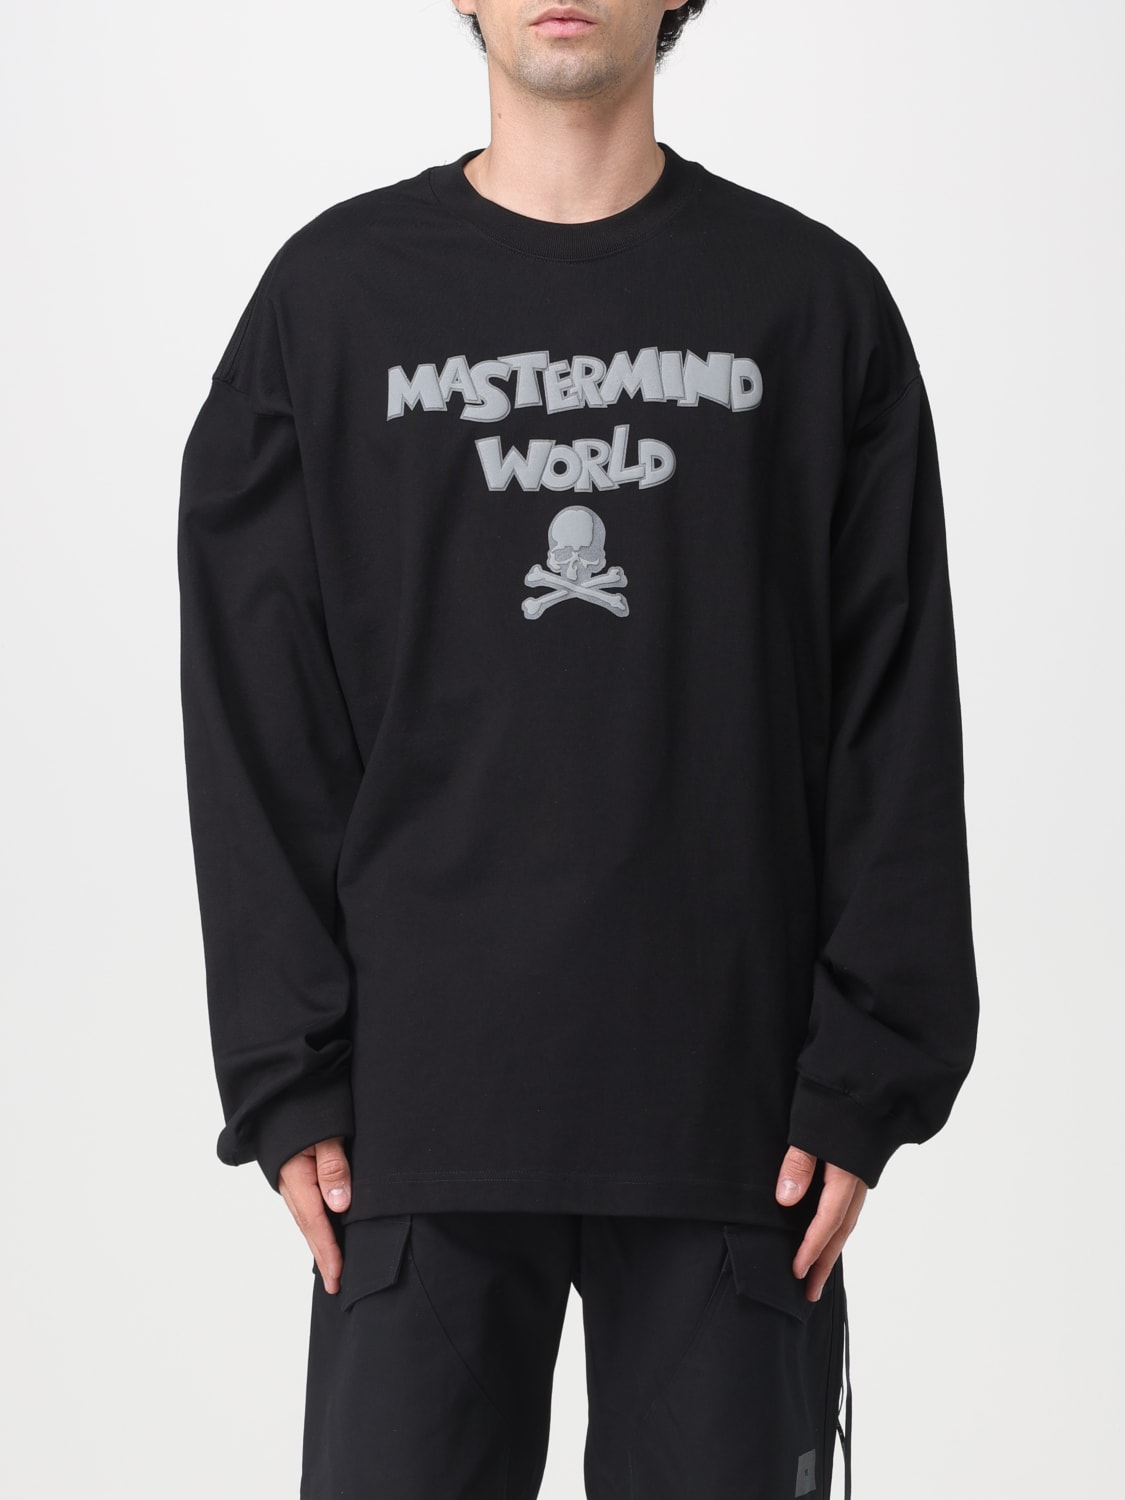 Mastermind World - T-shirt man